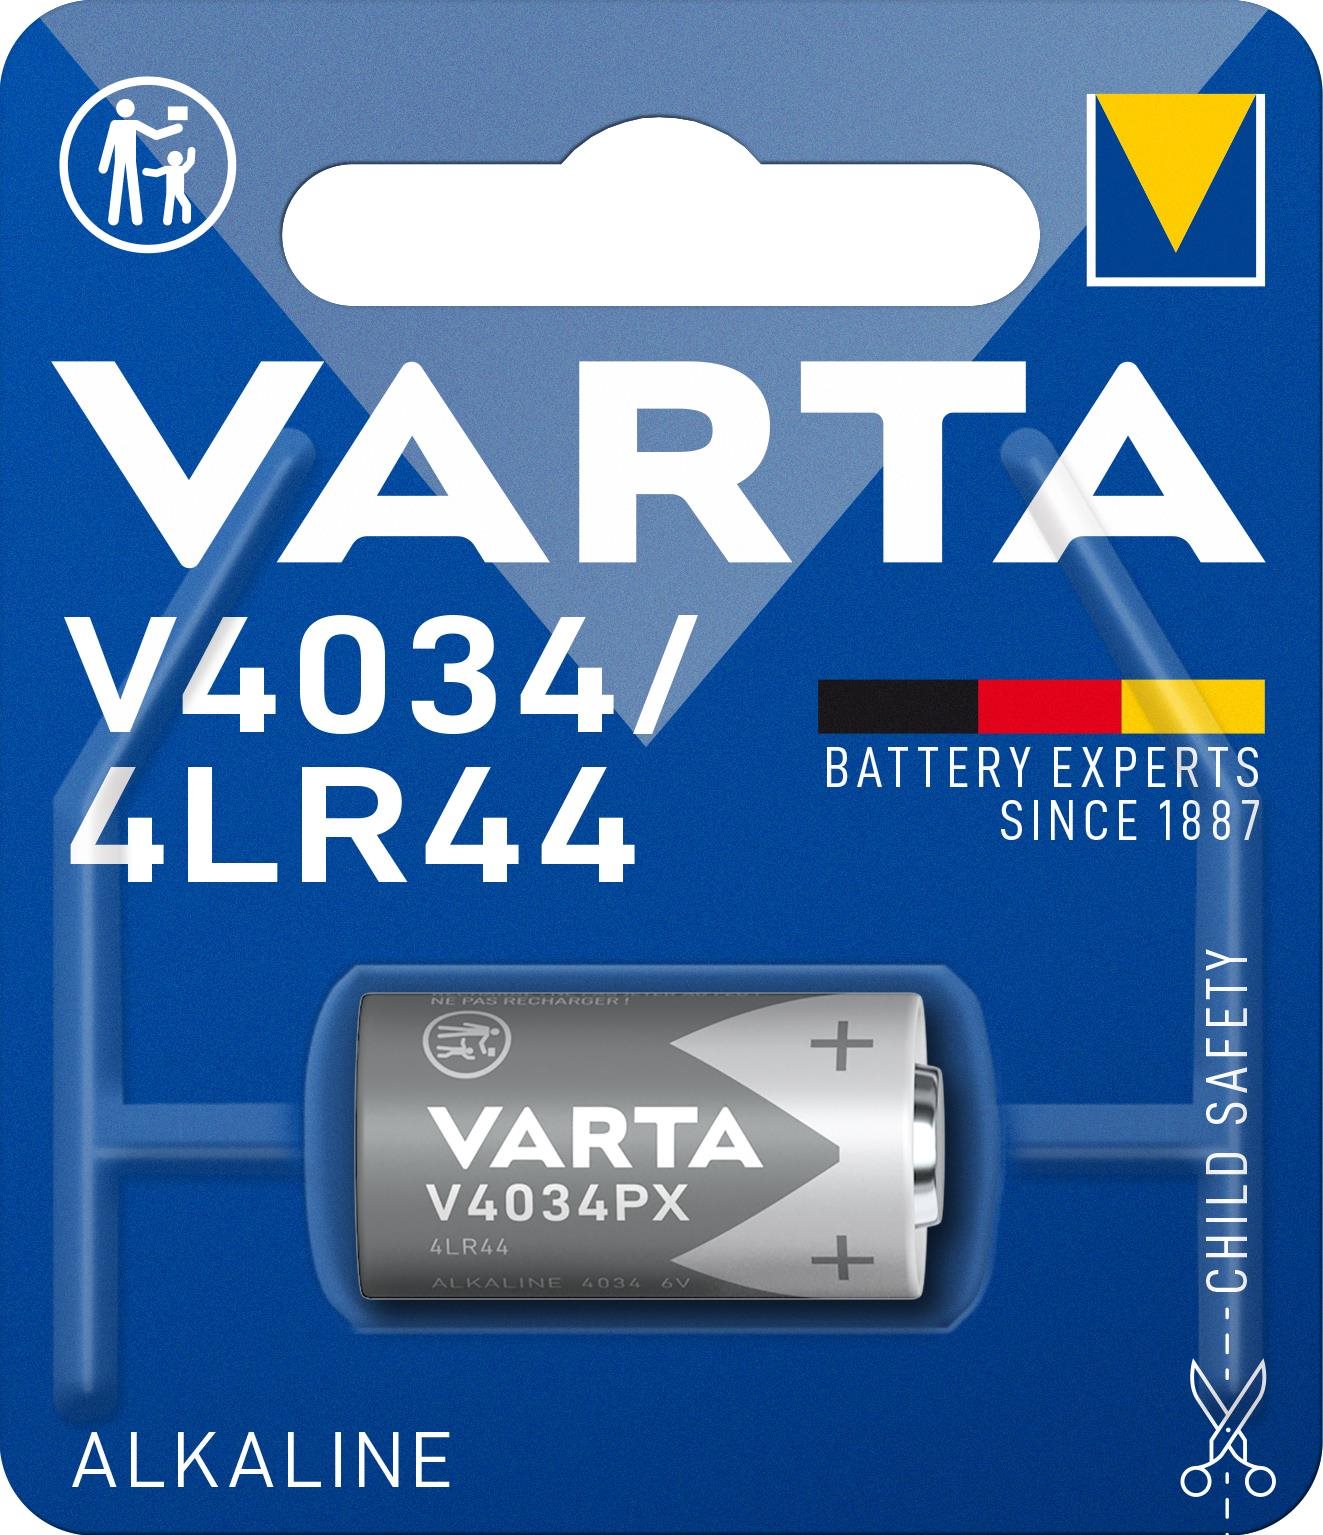 VARTA V4034/4LR44 Speciális alkáli elem 1 db